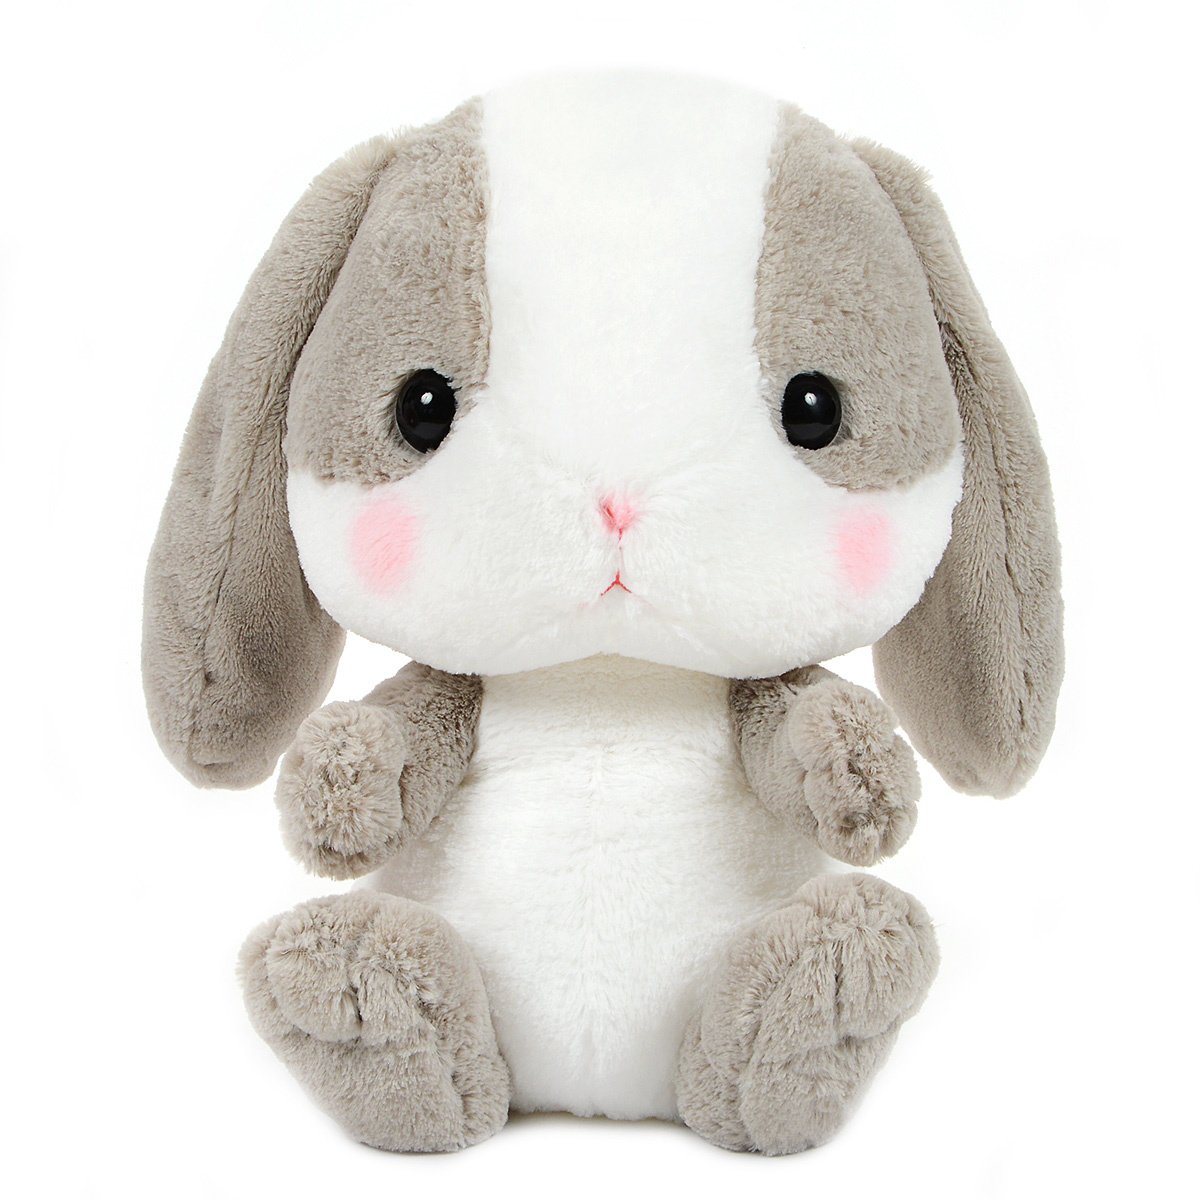 Amuse Bunny Plushie Cute Stuffed Animal Toy Grey / White Big Size